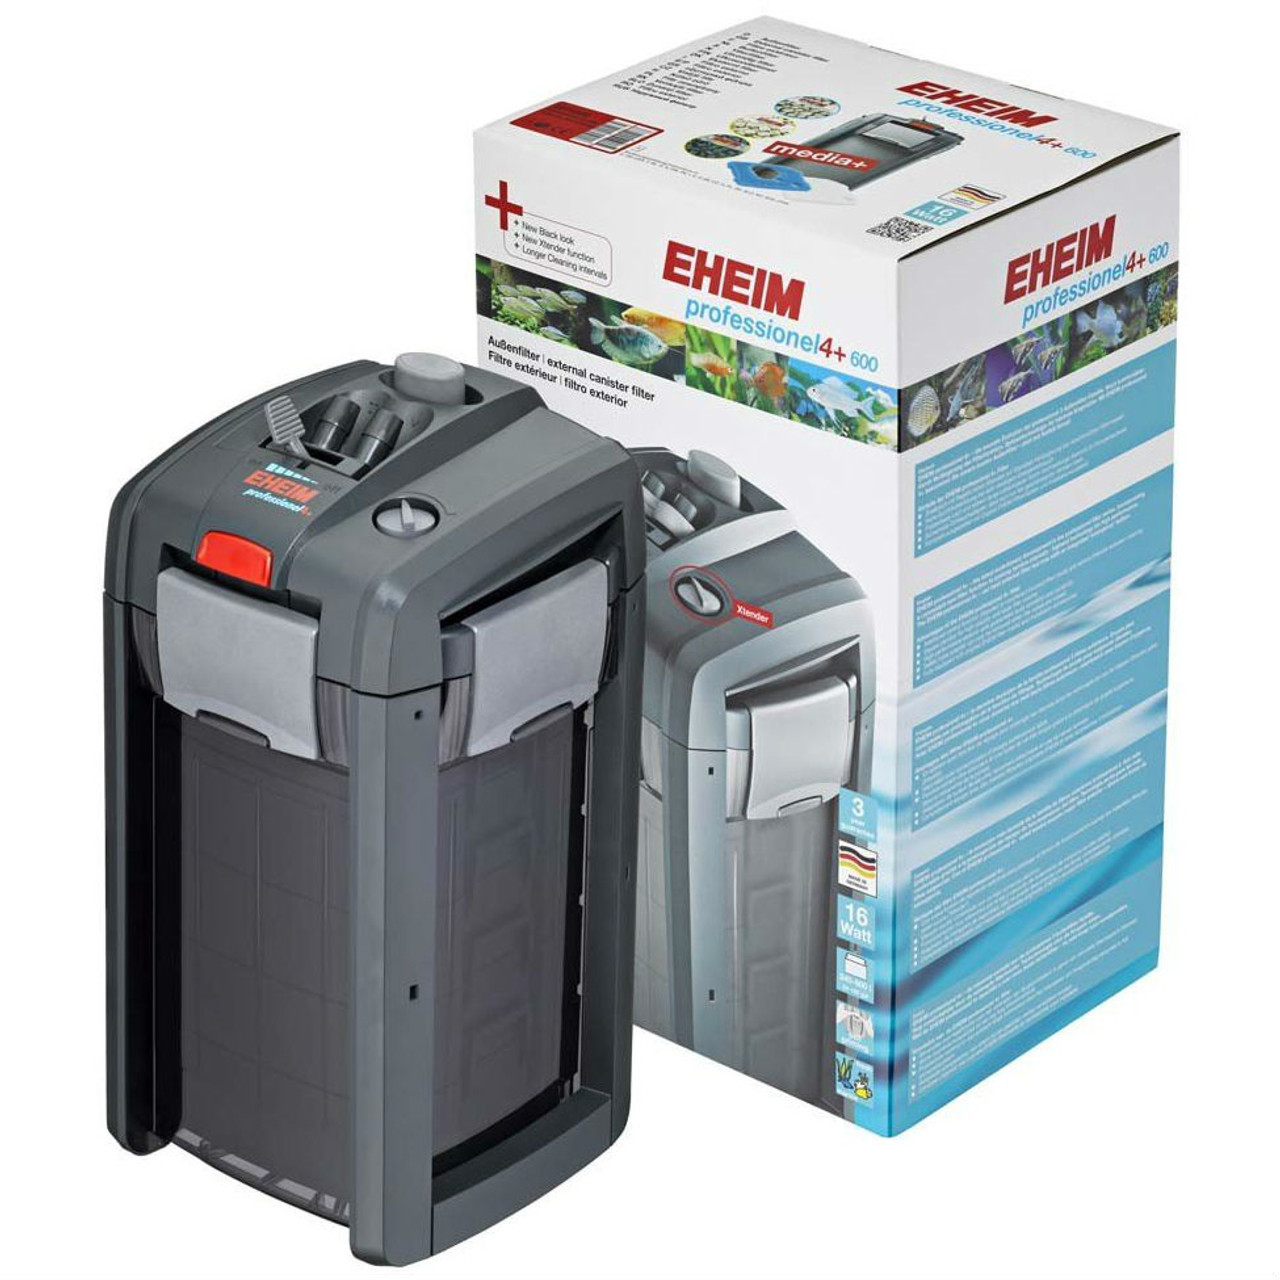 EHEIM Professionel 4 PLUS 600 External Filter